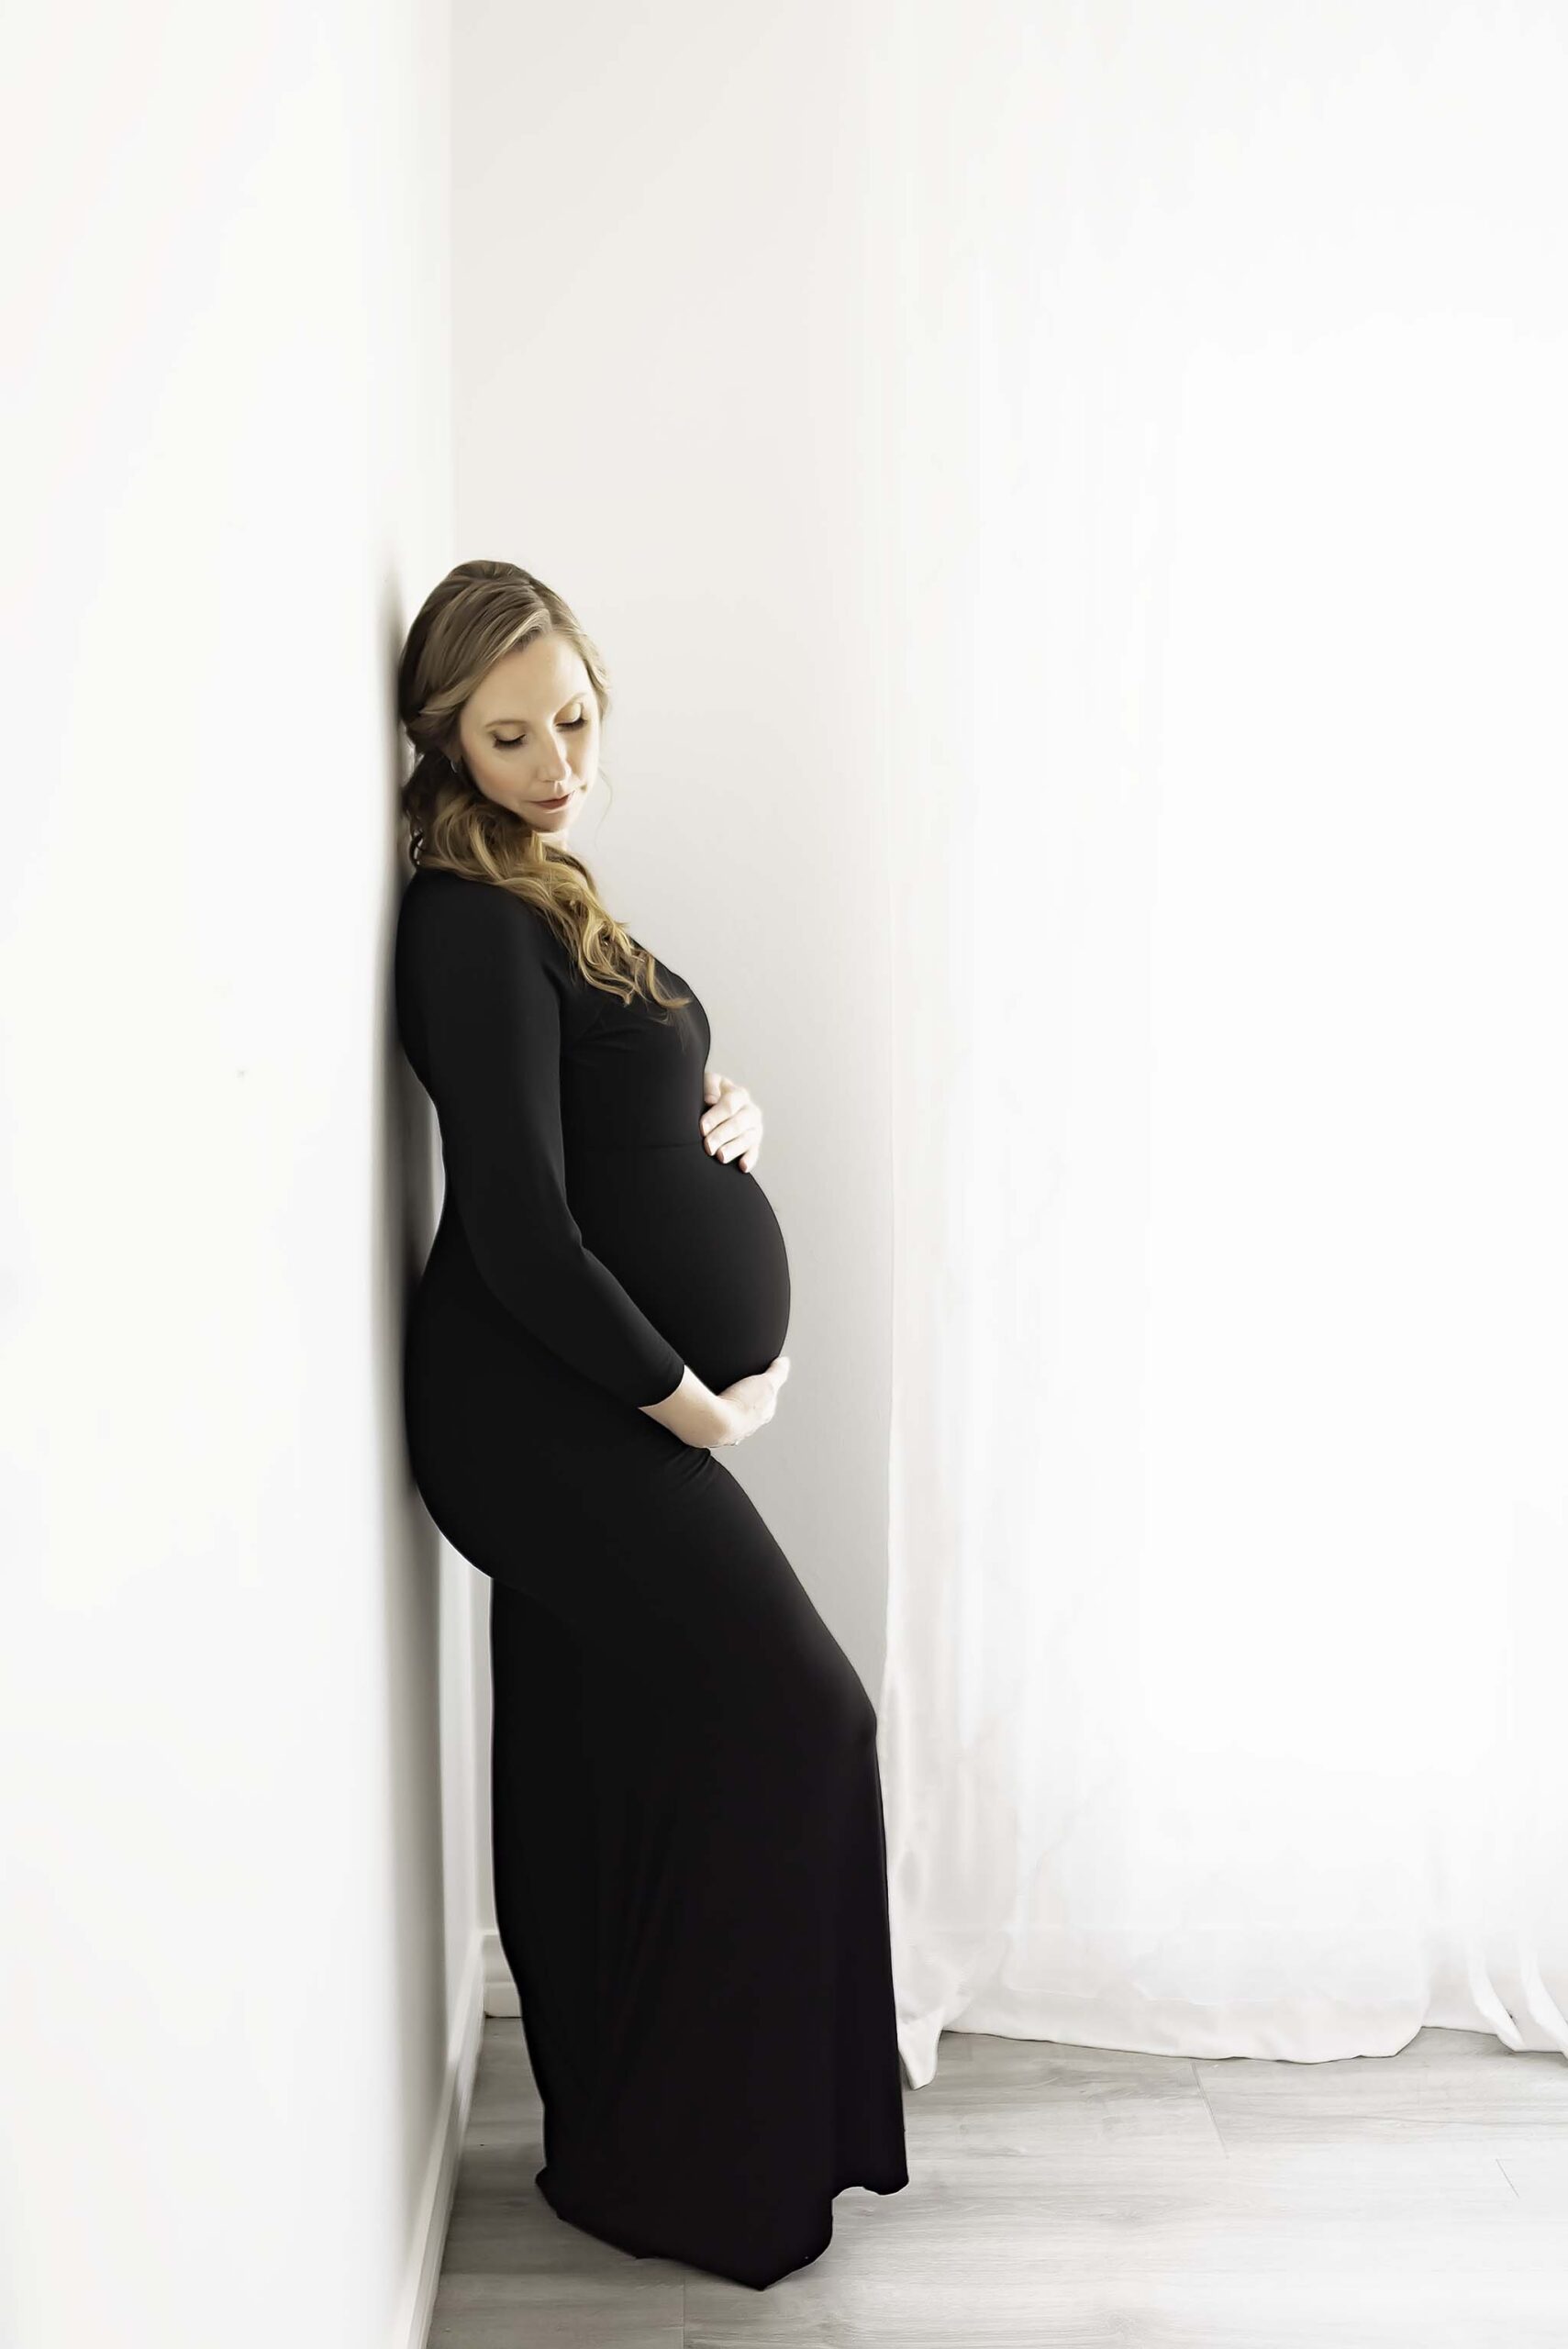 Black Maternity Dress at photoshoot